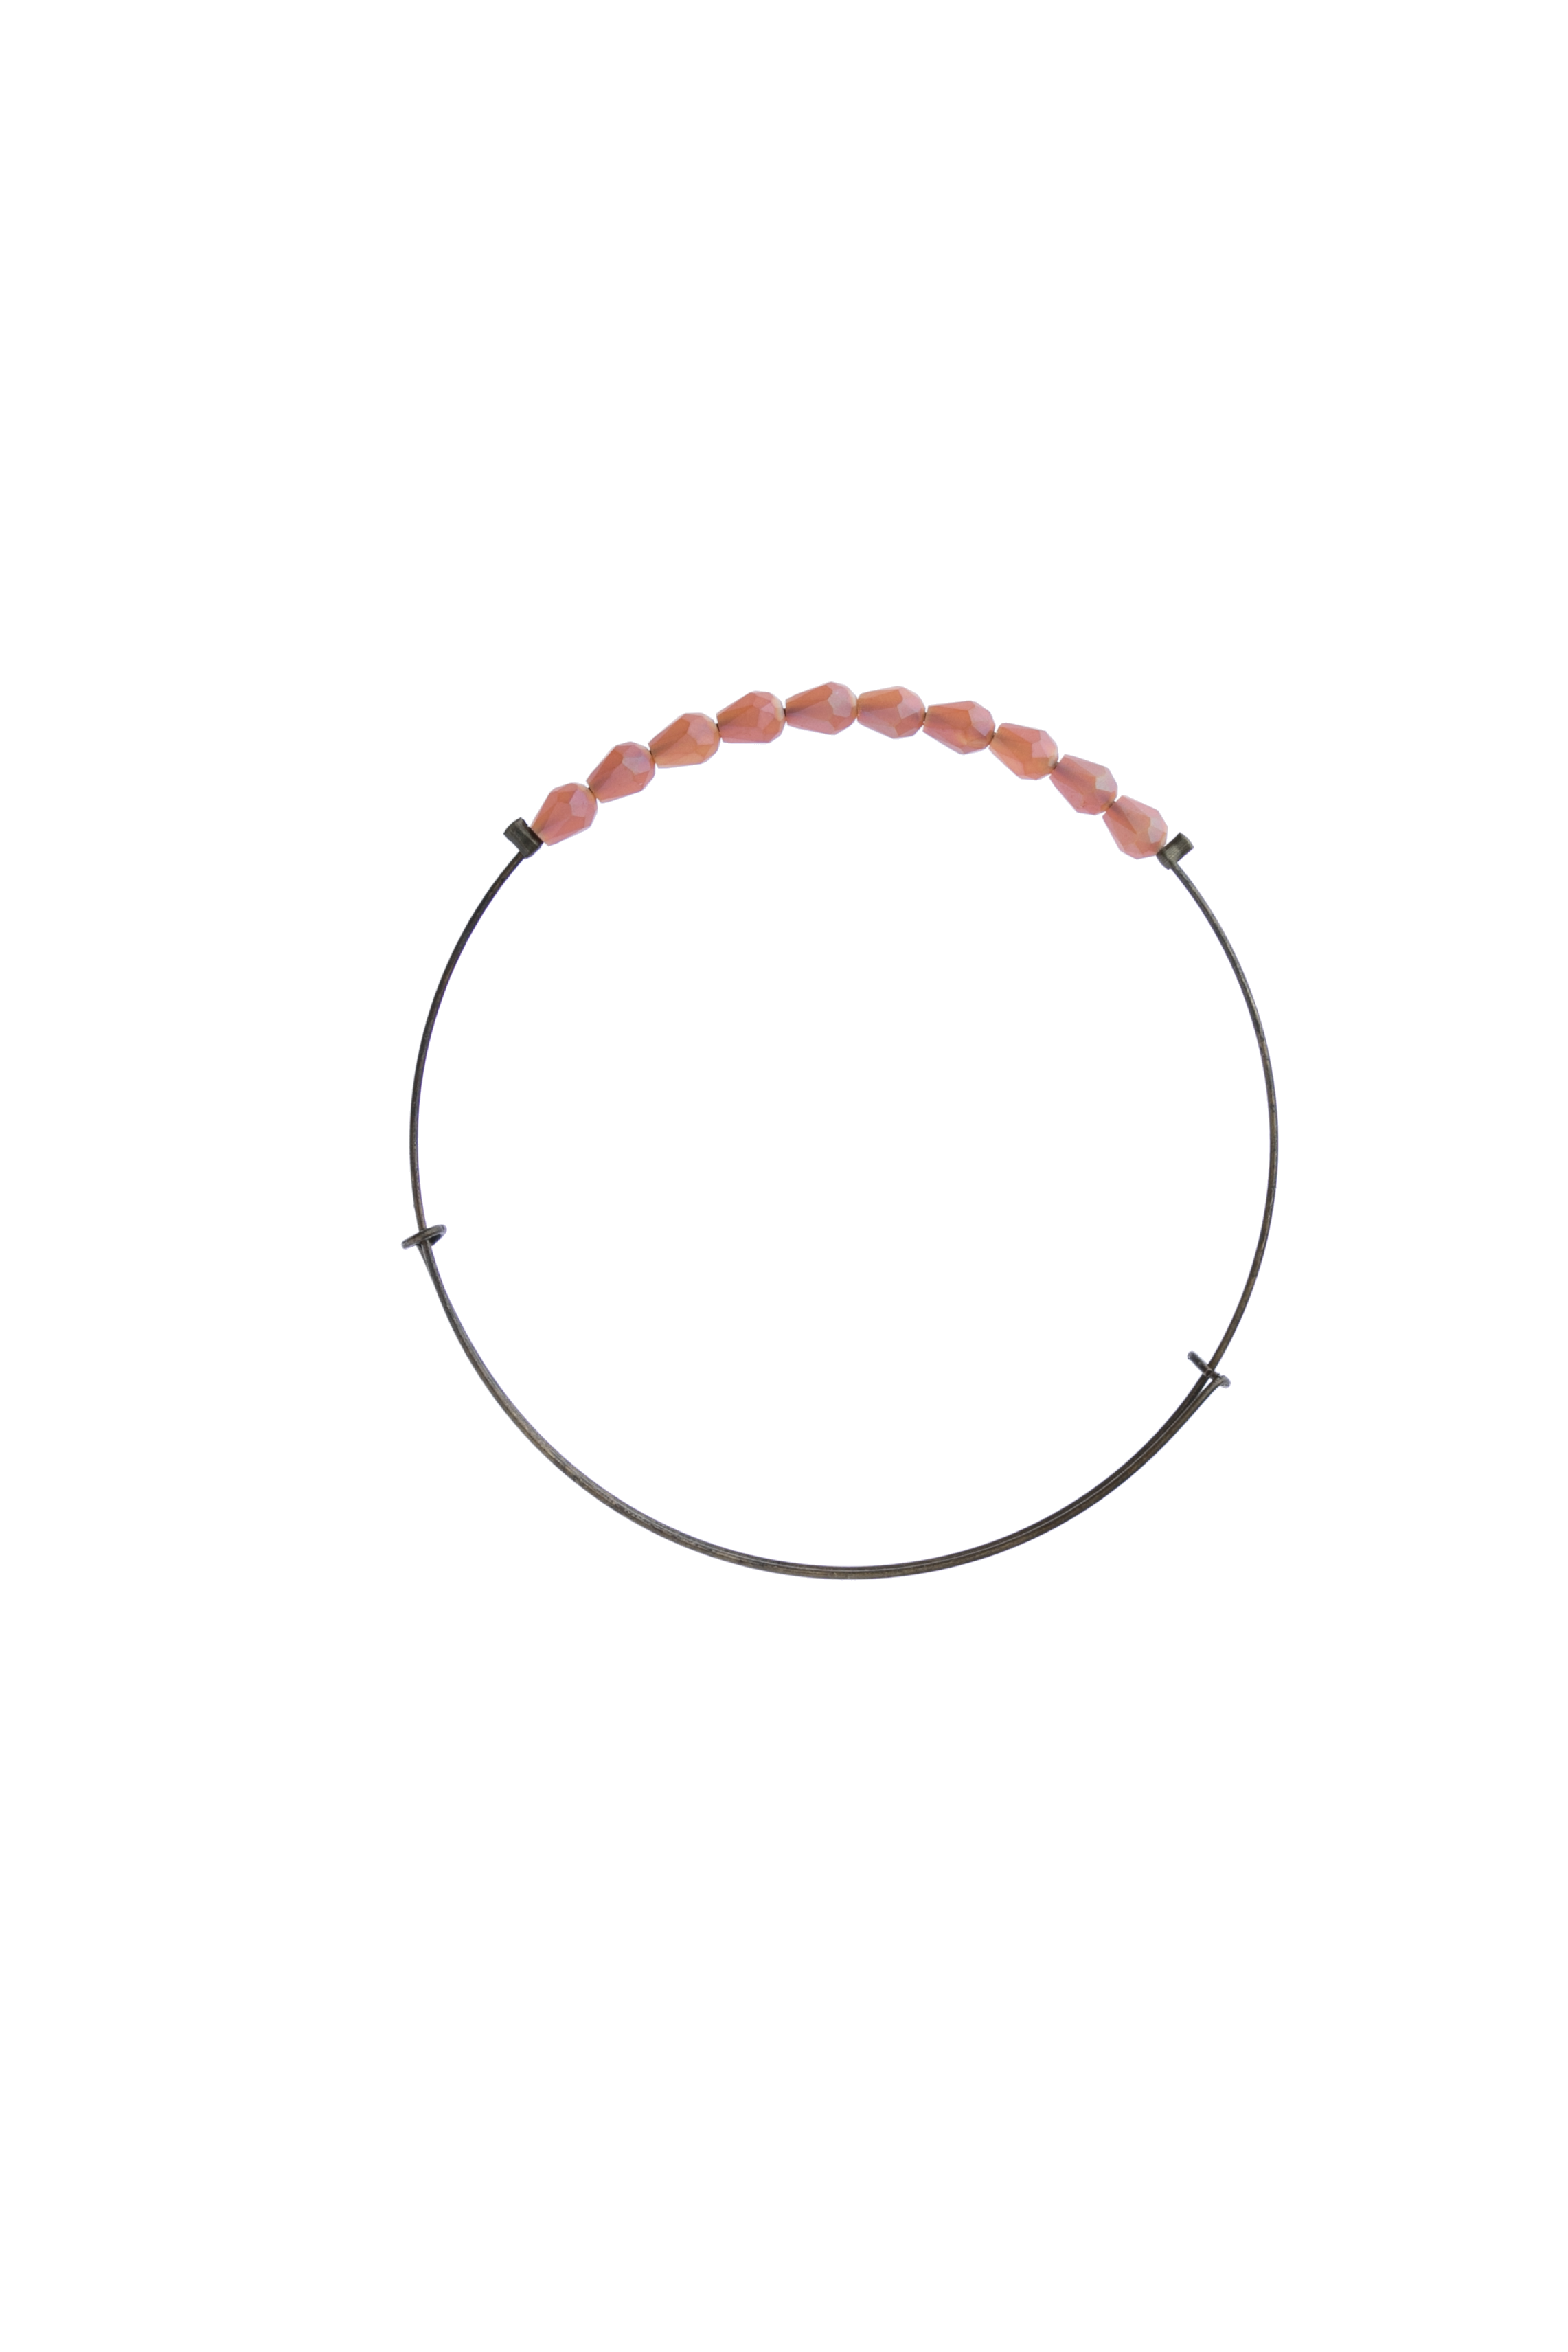 "Rose/Peach" Teardrop Crystal Wire Bangle